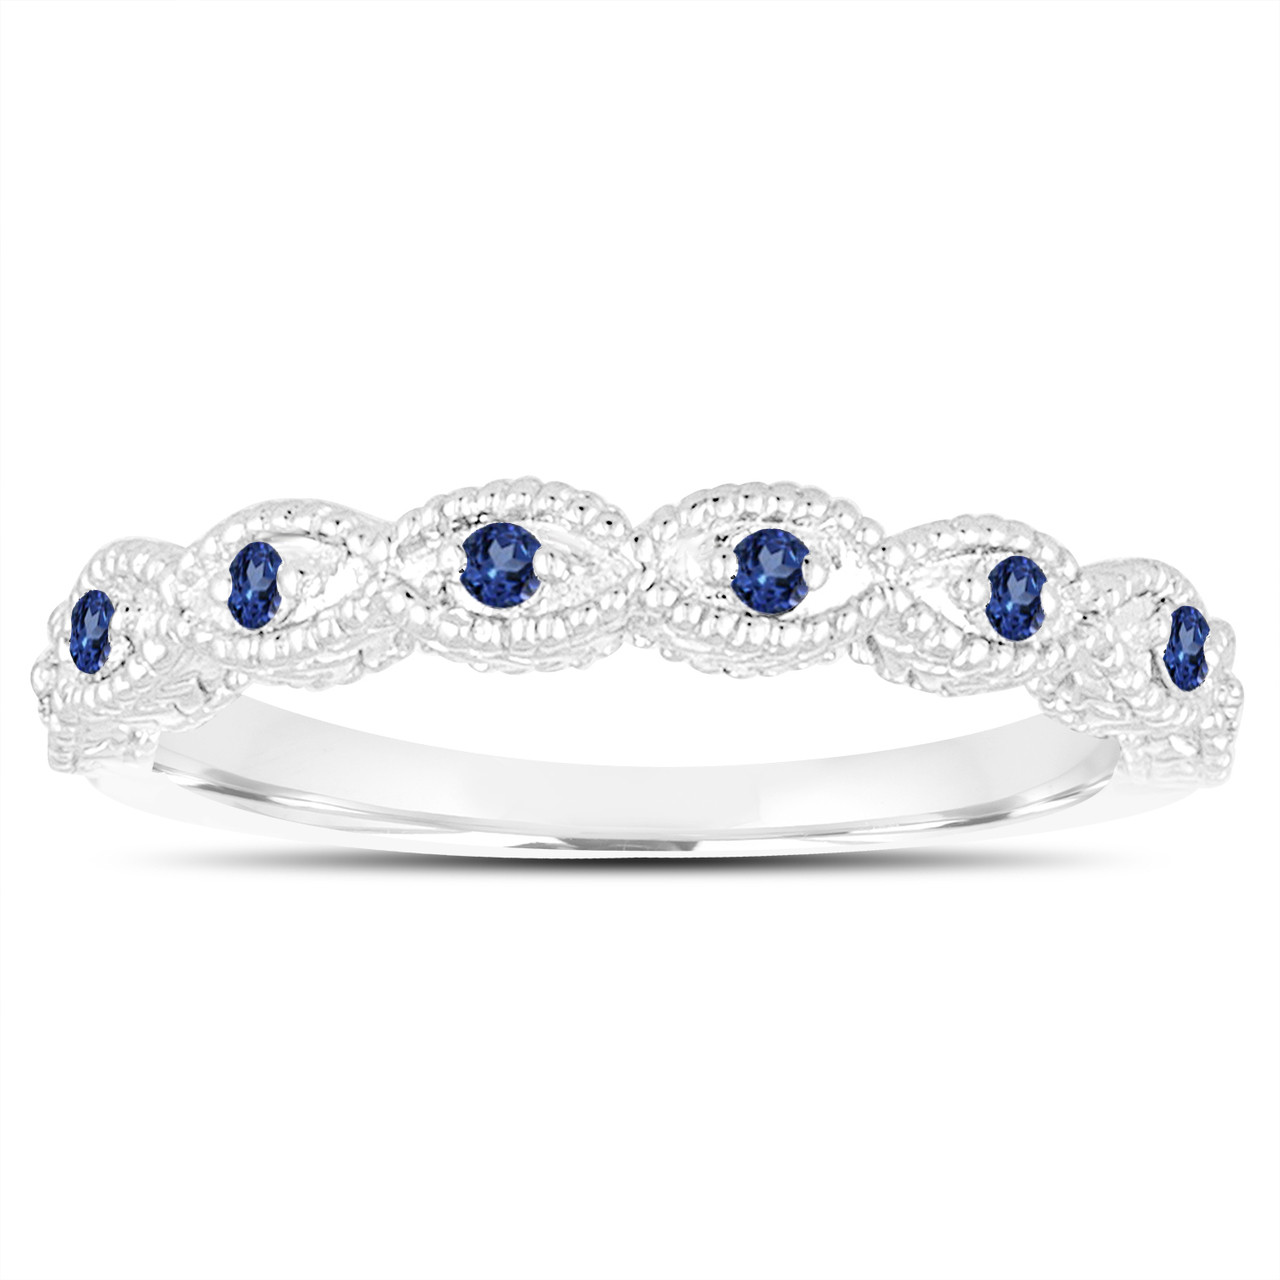 Blue Sapphire Wedding Band Wedding Ring Vintage Antique Style Engraved 2  78999.1477502328.1280.1280 ?c=2